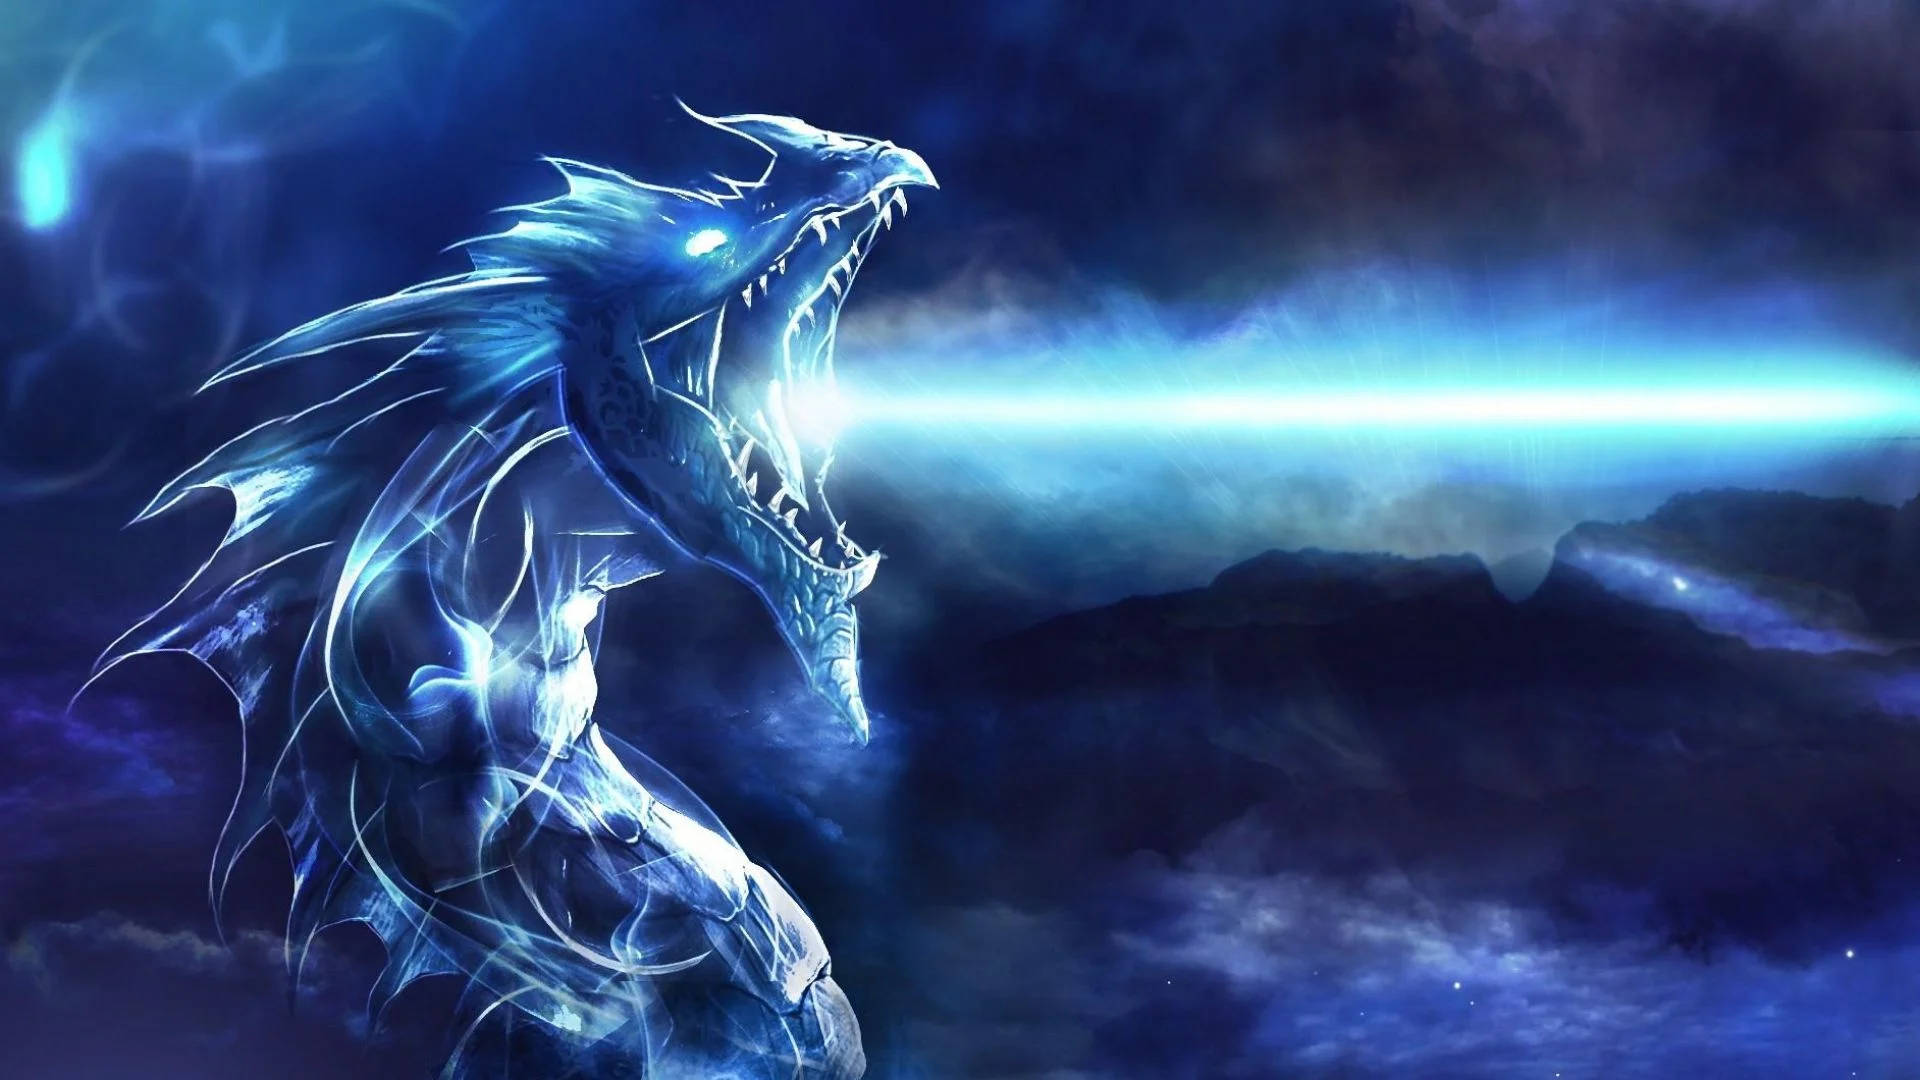 Blue-Headed Light Dragon - A Mystical Creature in Night Sky Wallpaper